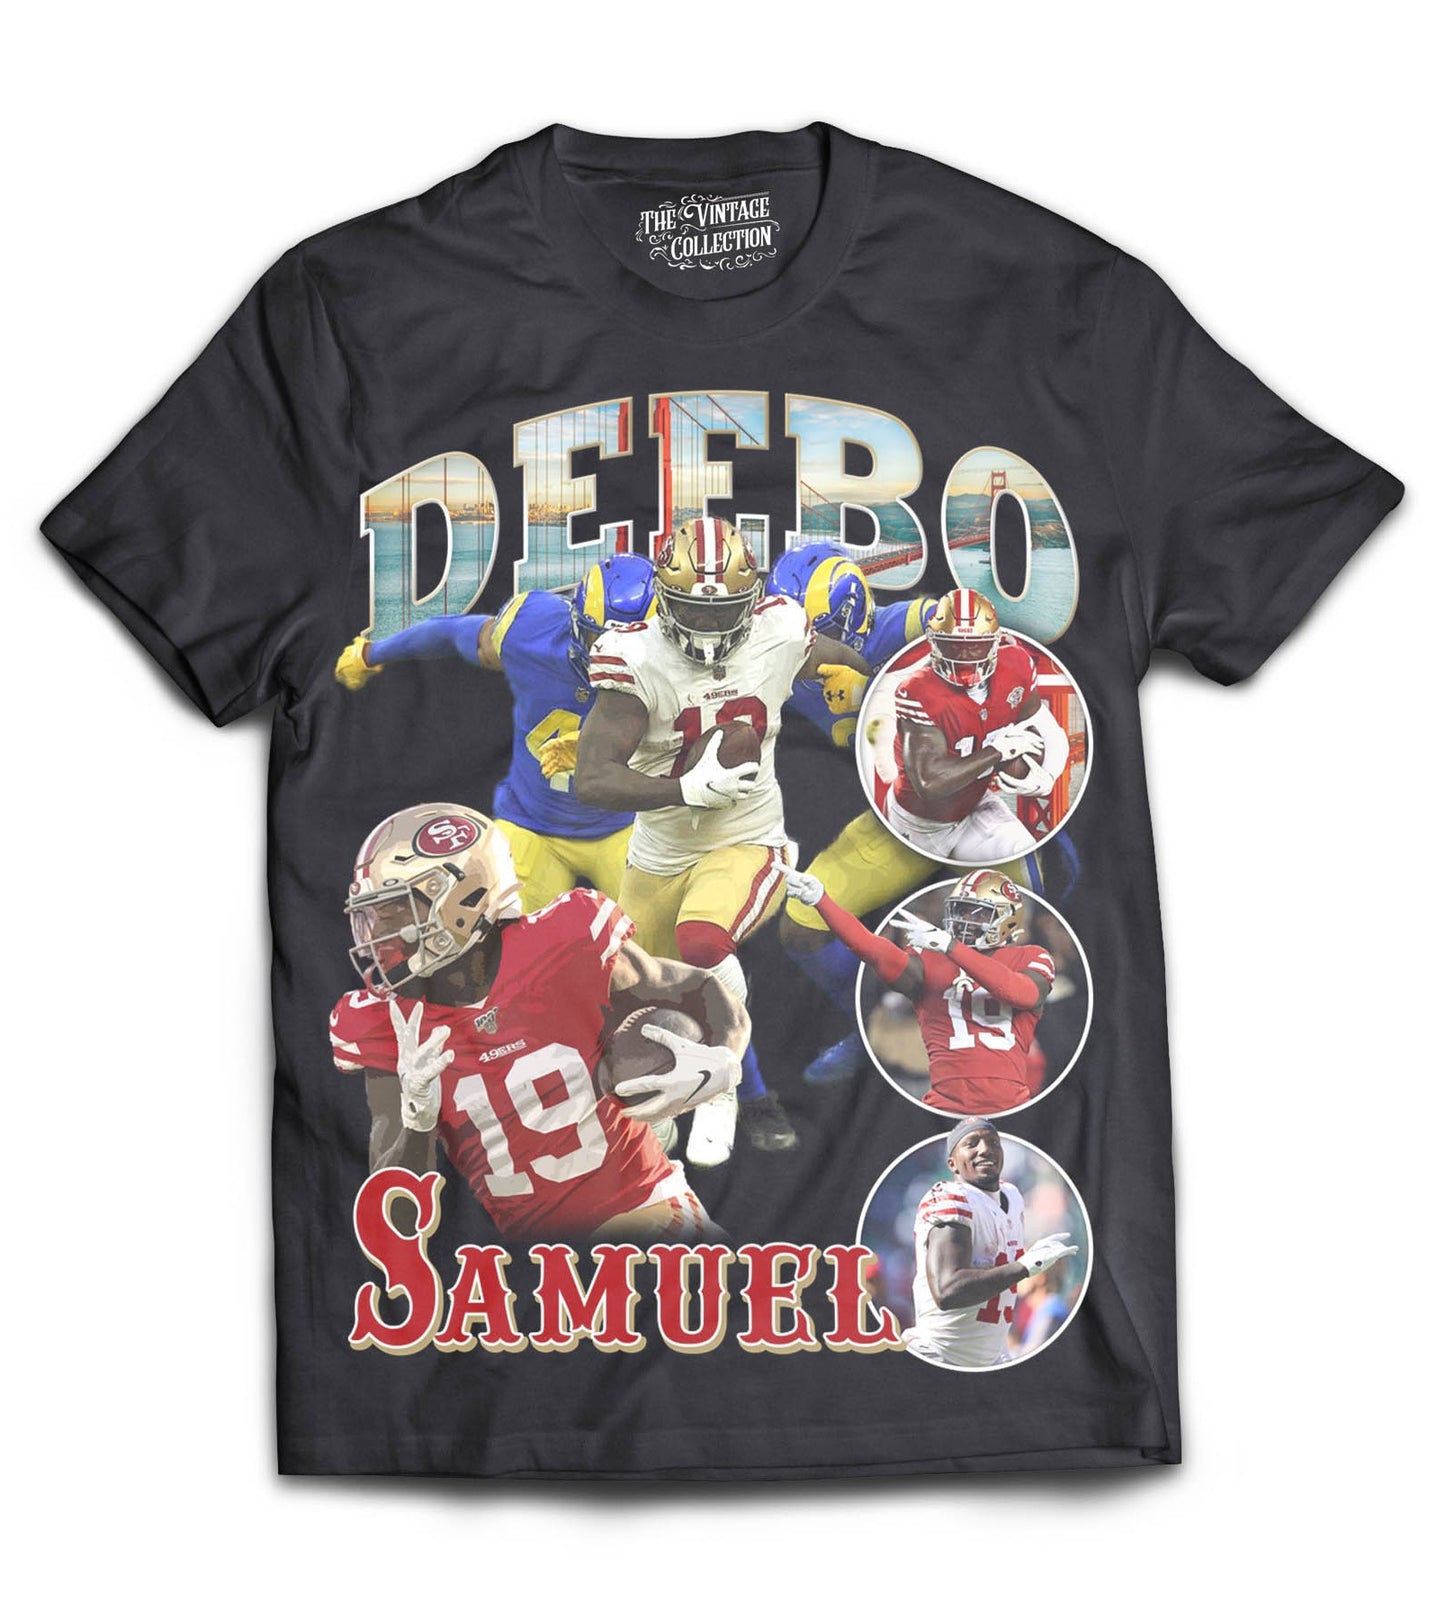 Deebo Samuel Tribute T-Shirt